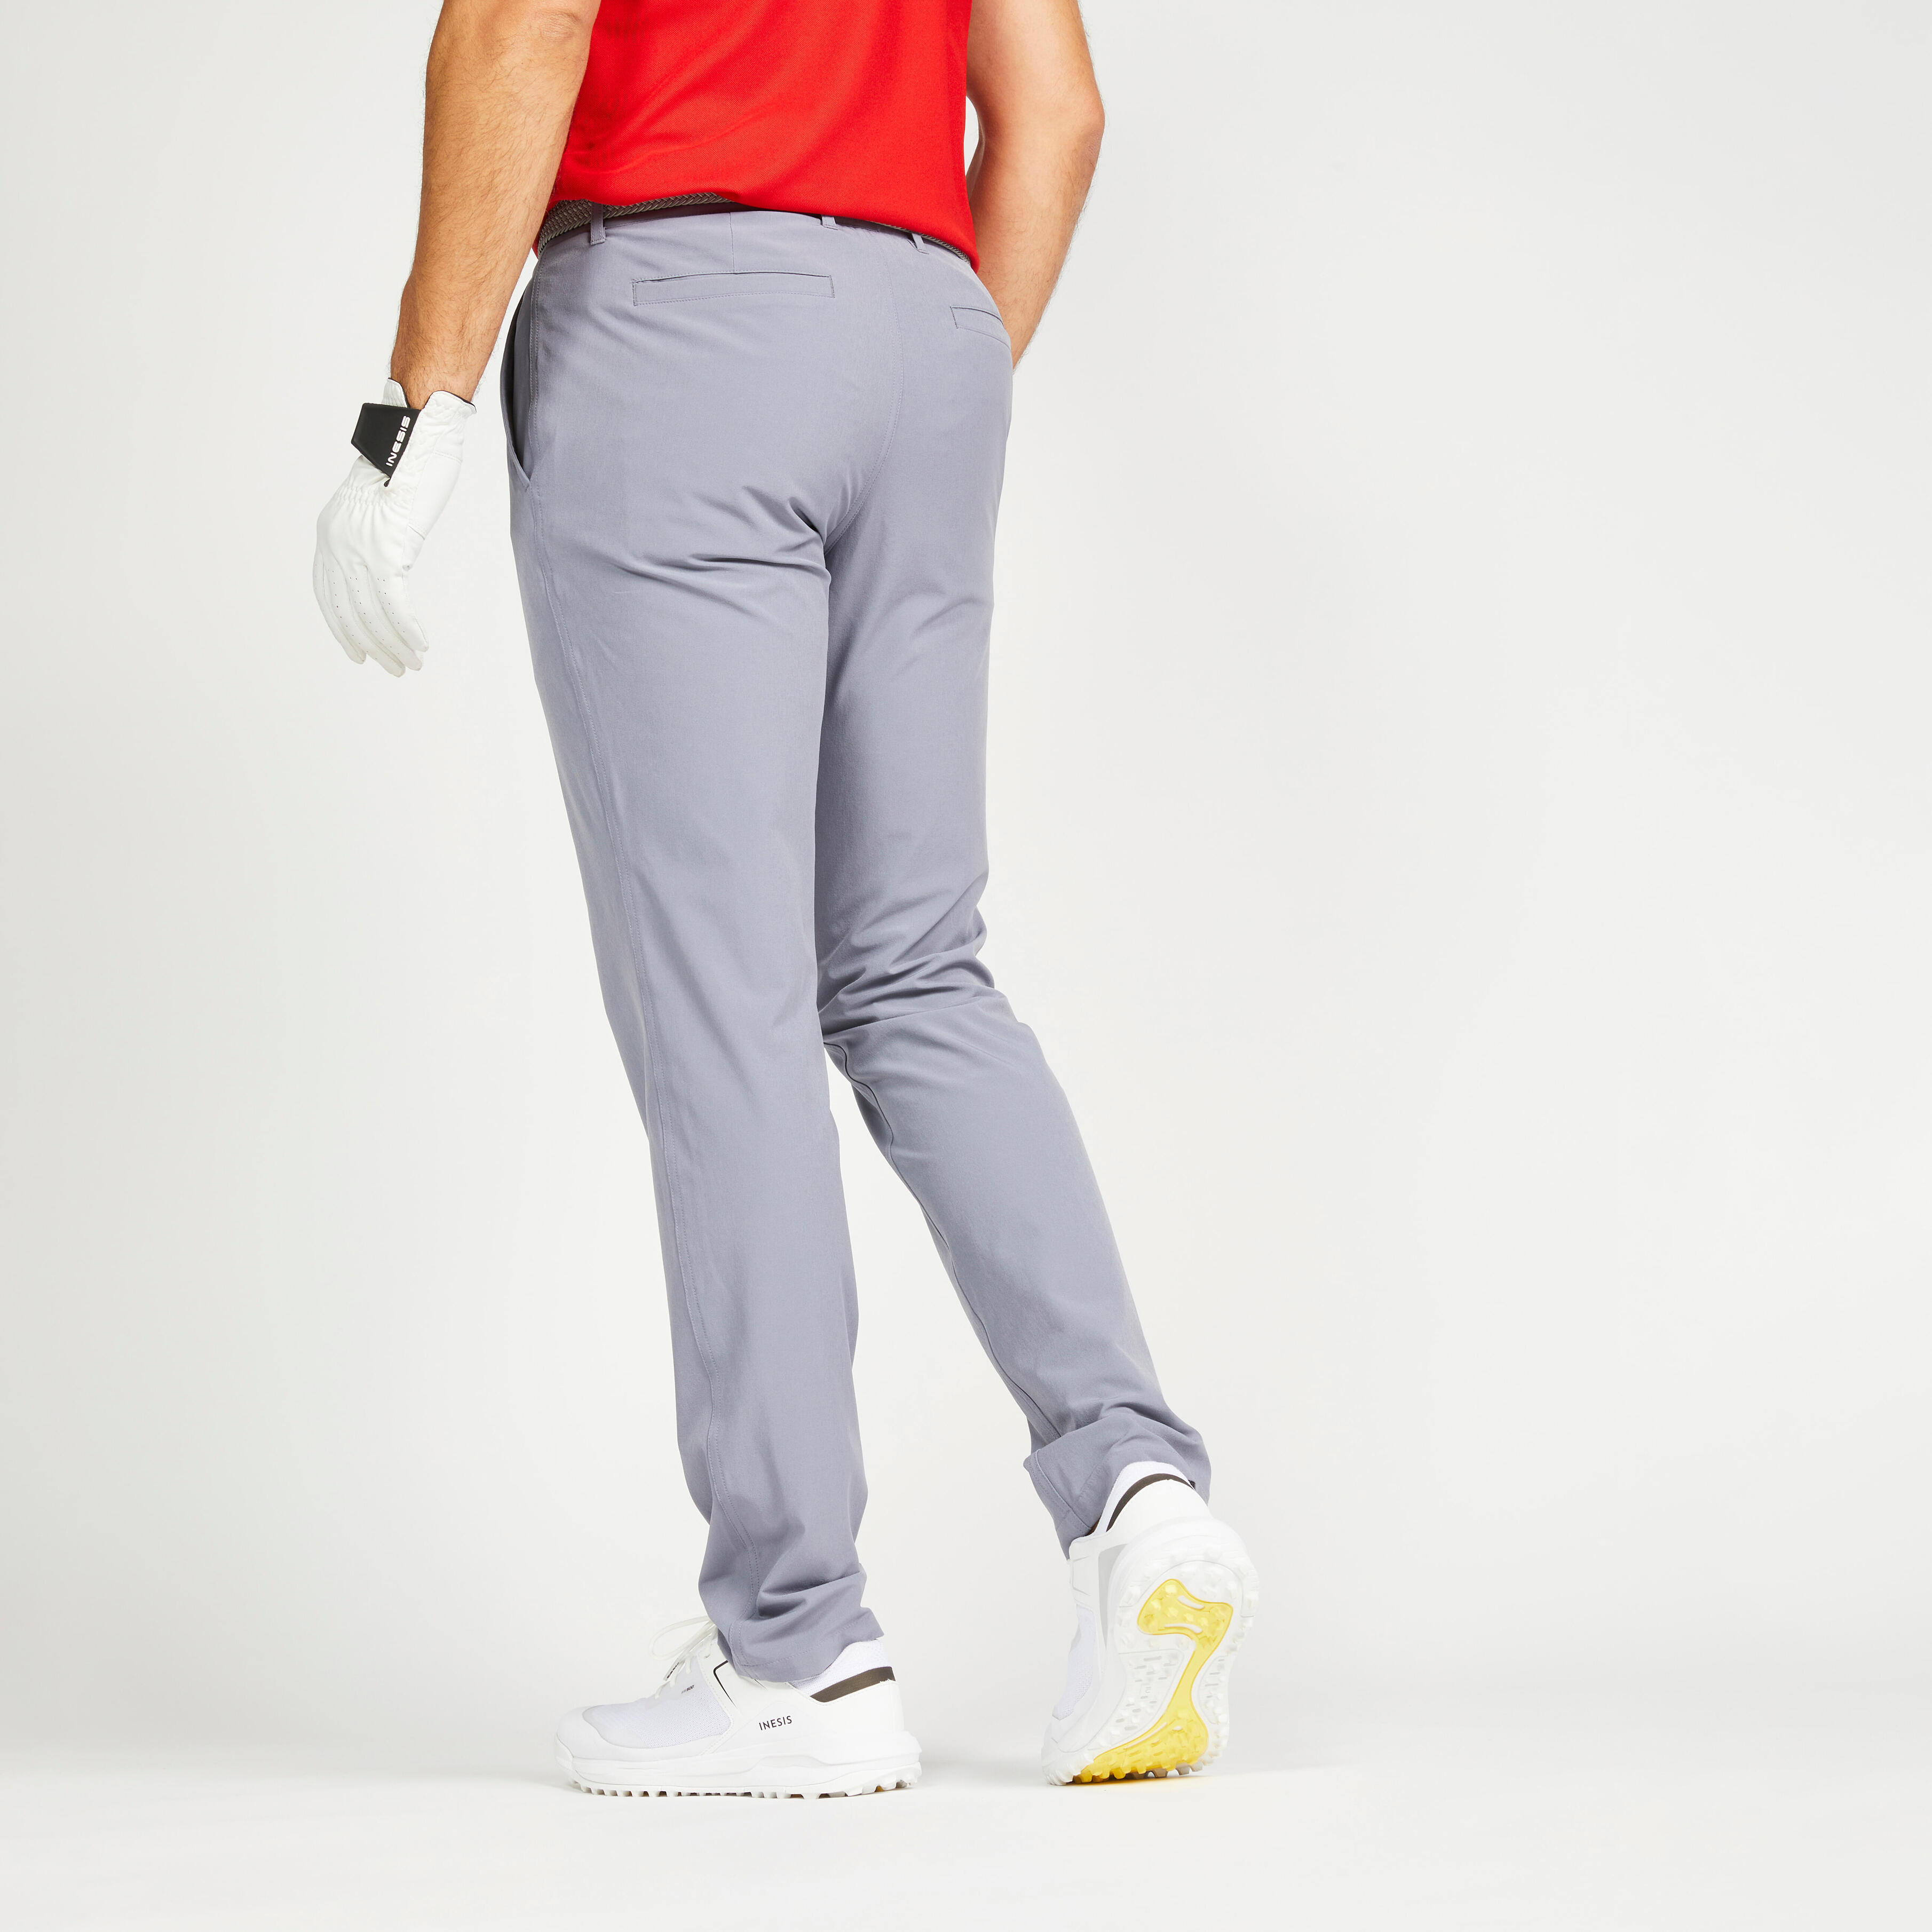 Men's golf trousers - WW 500 grey